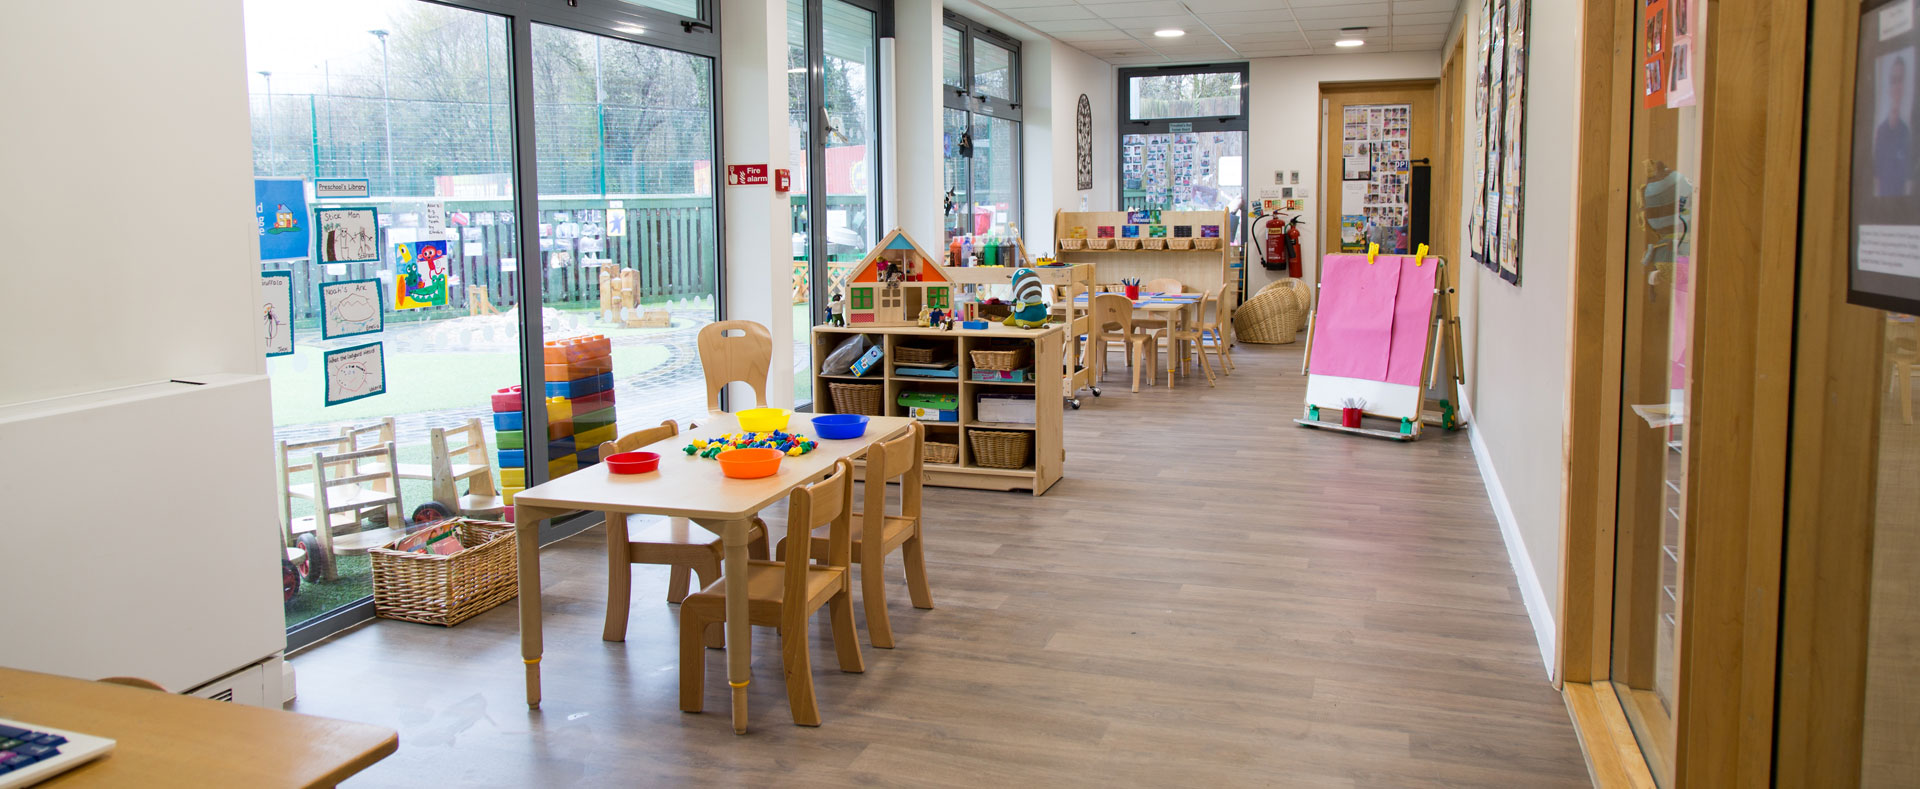 North Cheam Day Nursery and Preschool